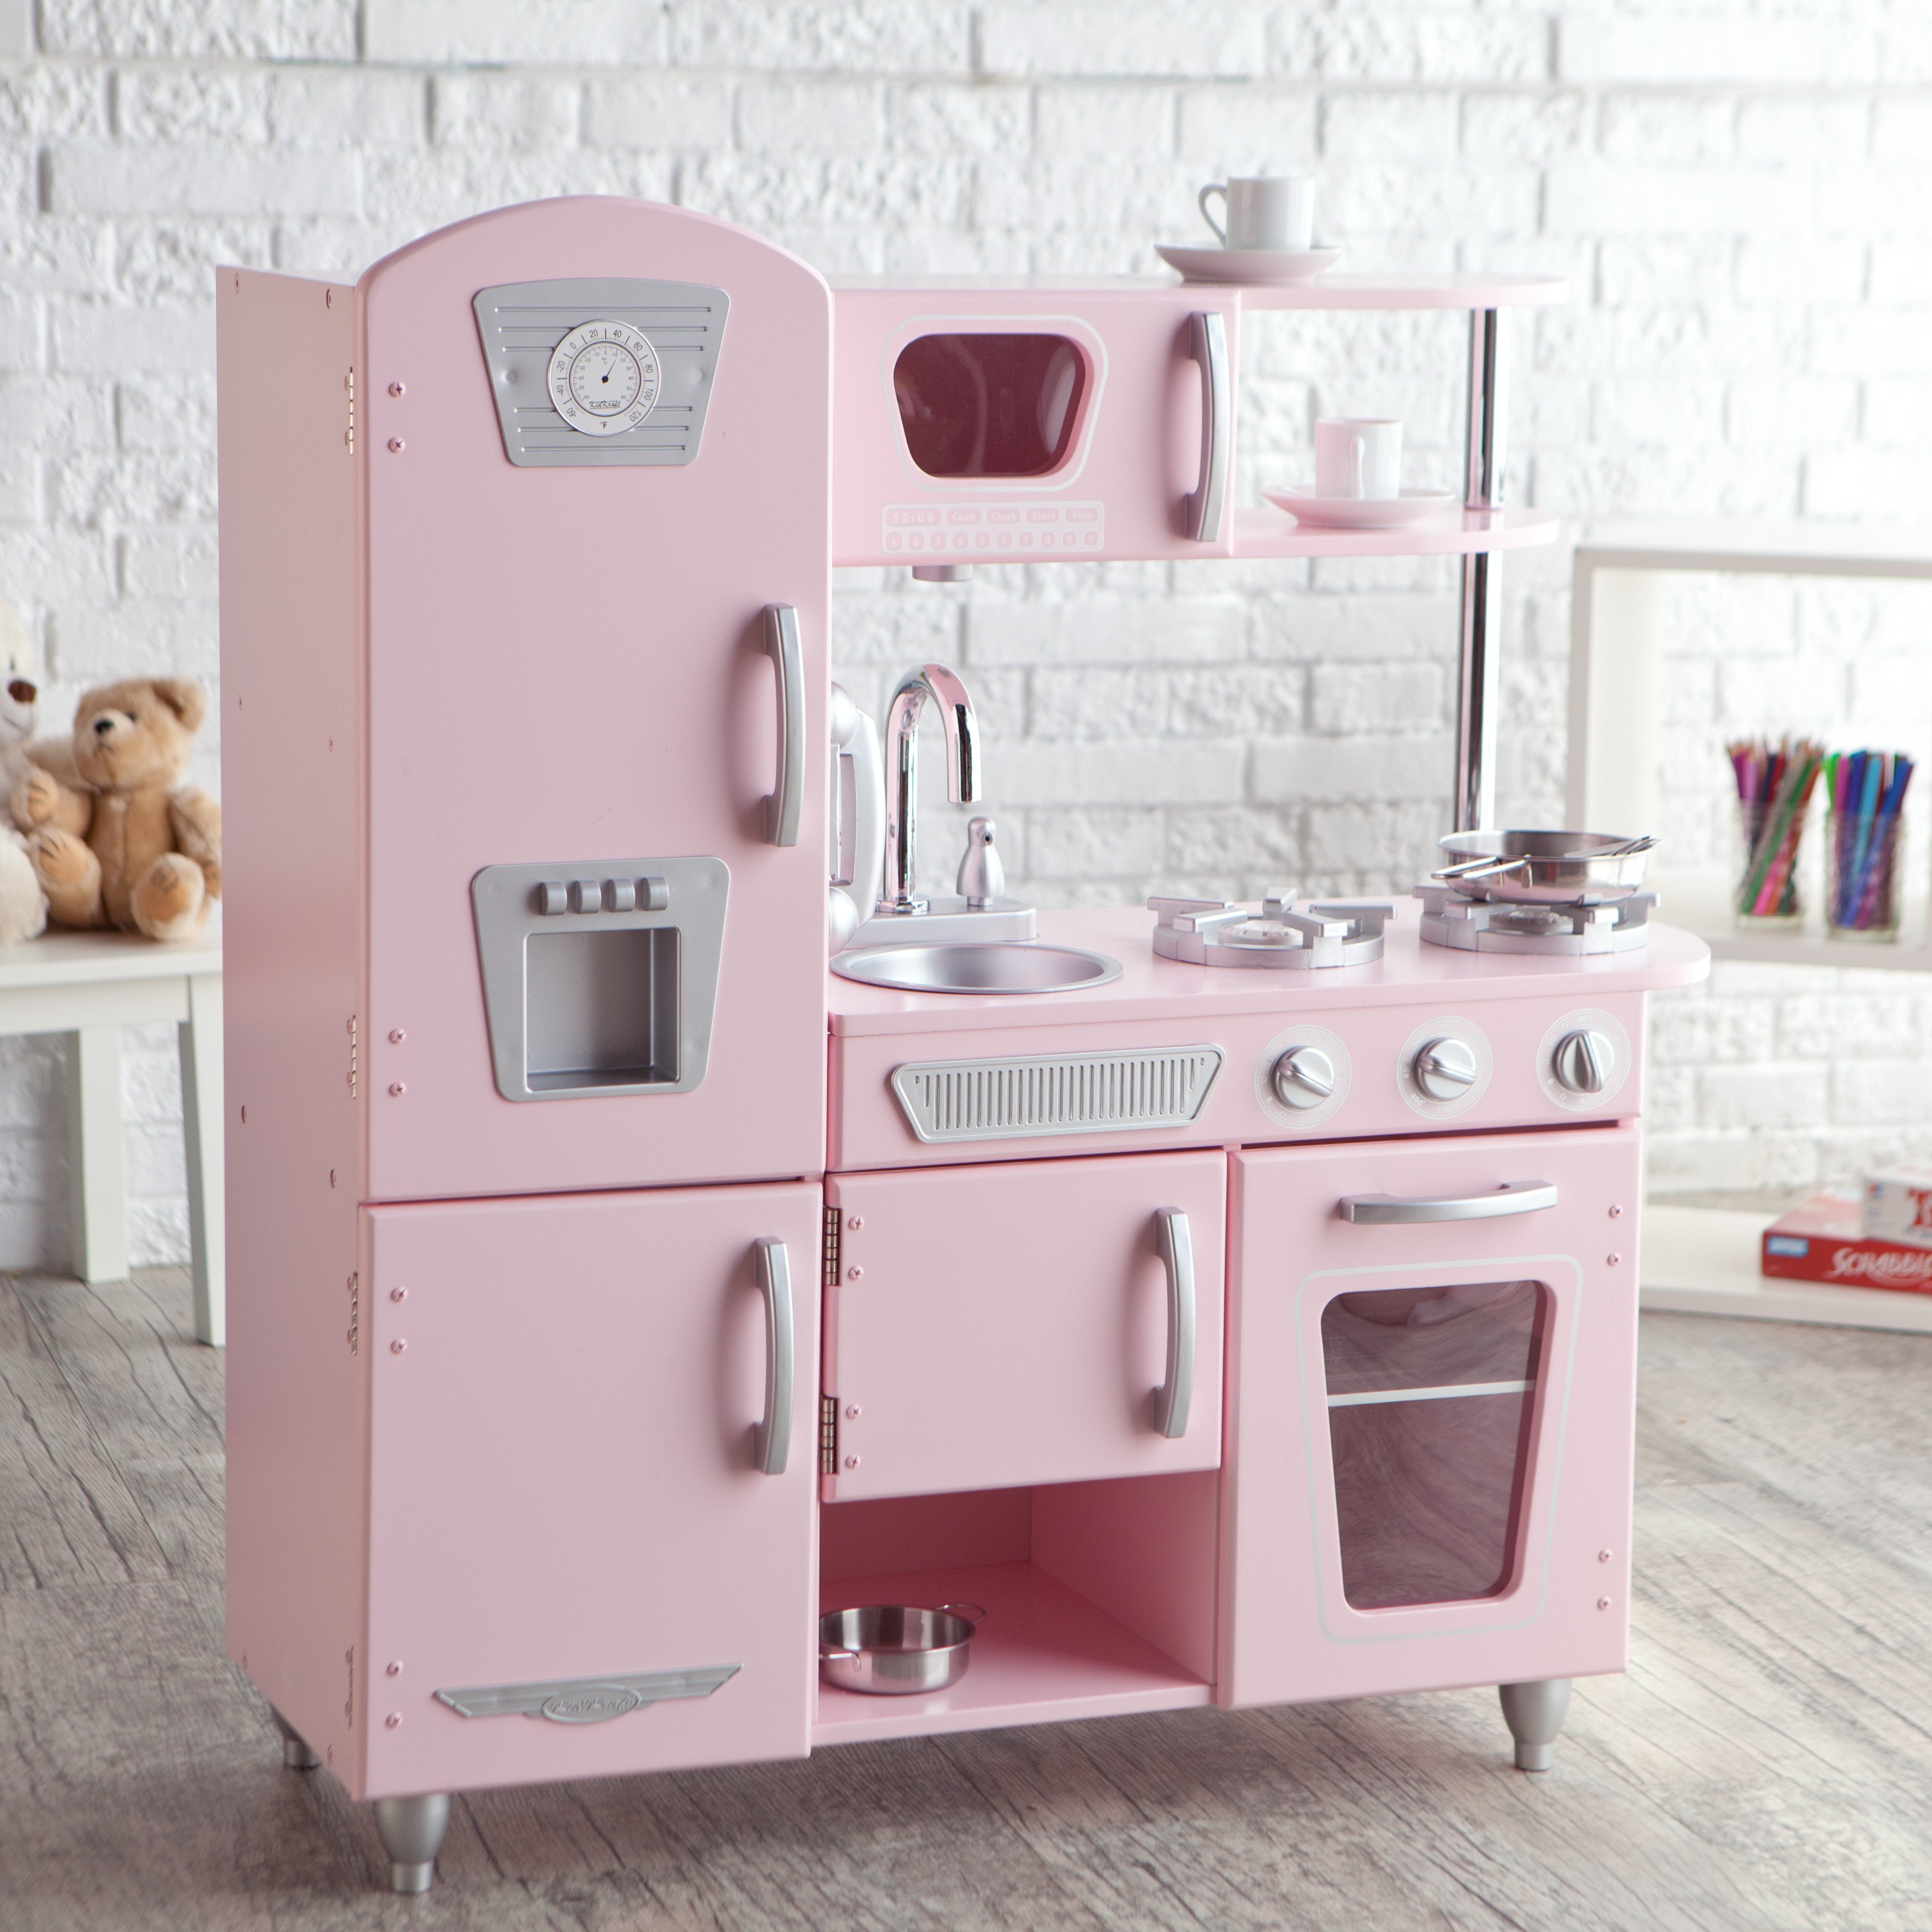 Retro kitchen sets for girls | Hawk Haven